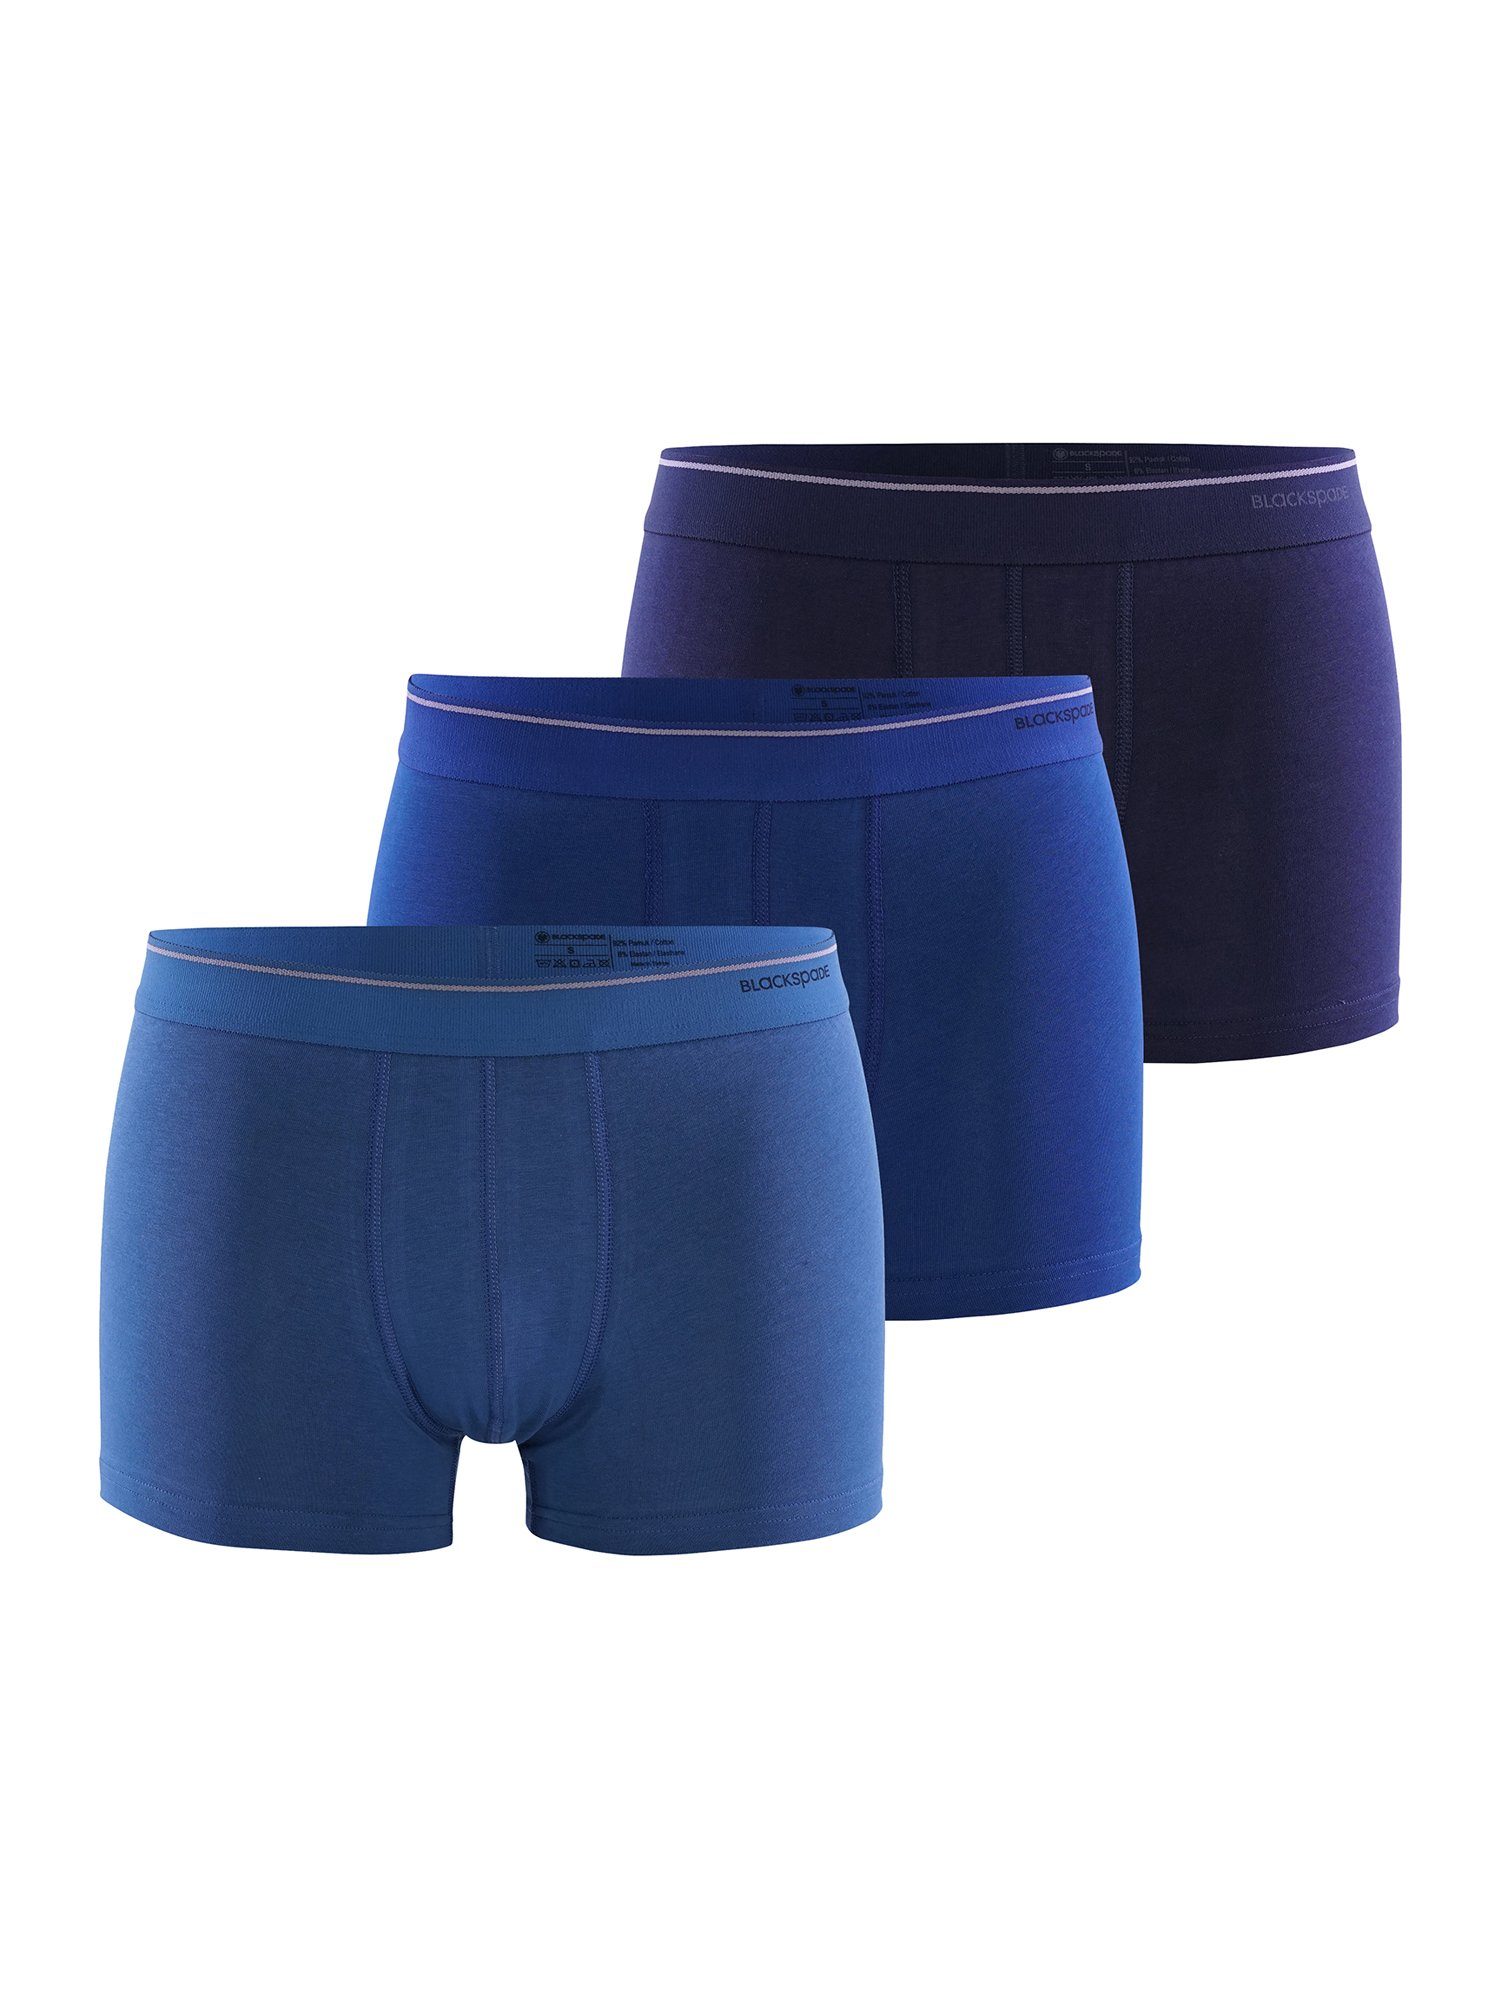 BlackSpade Retro Pants Tender Cotton (3-St) navy, blau, denim